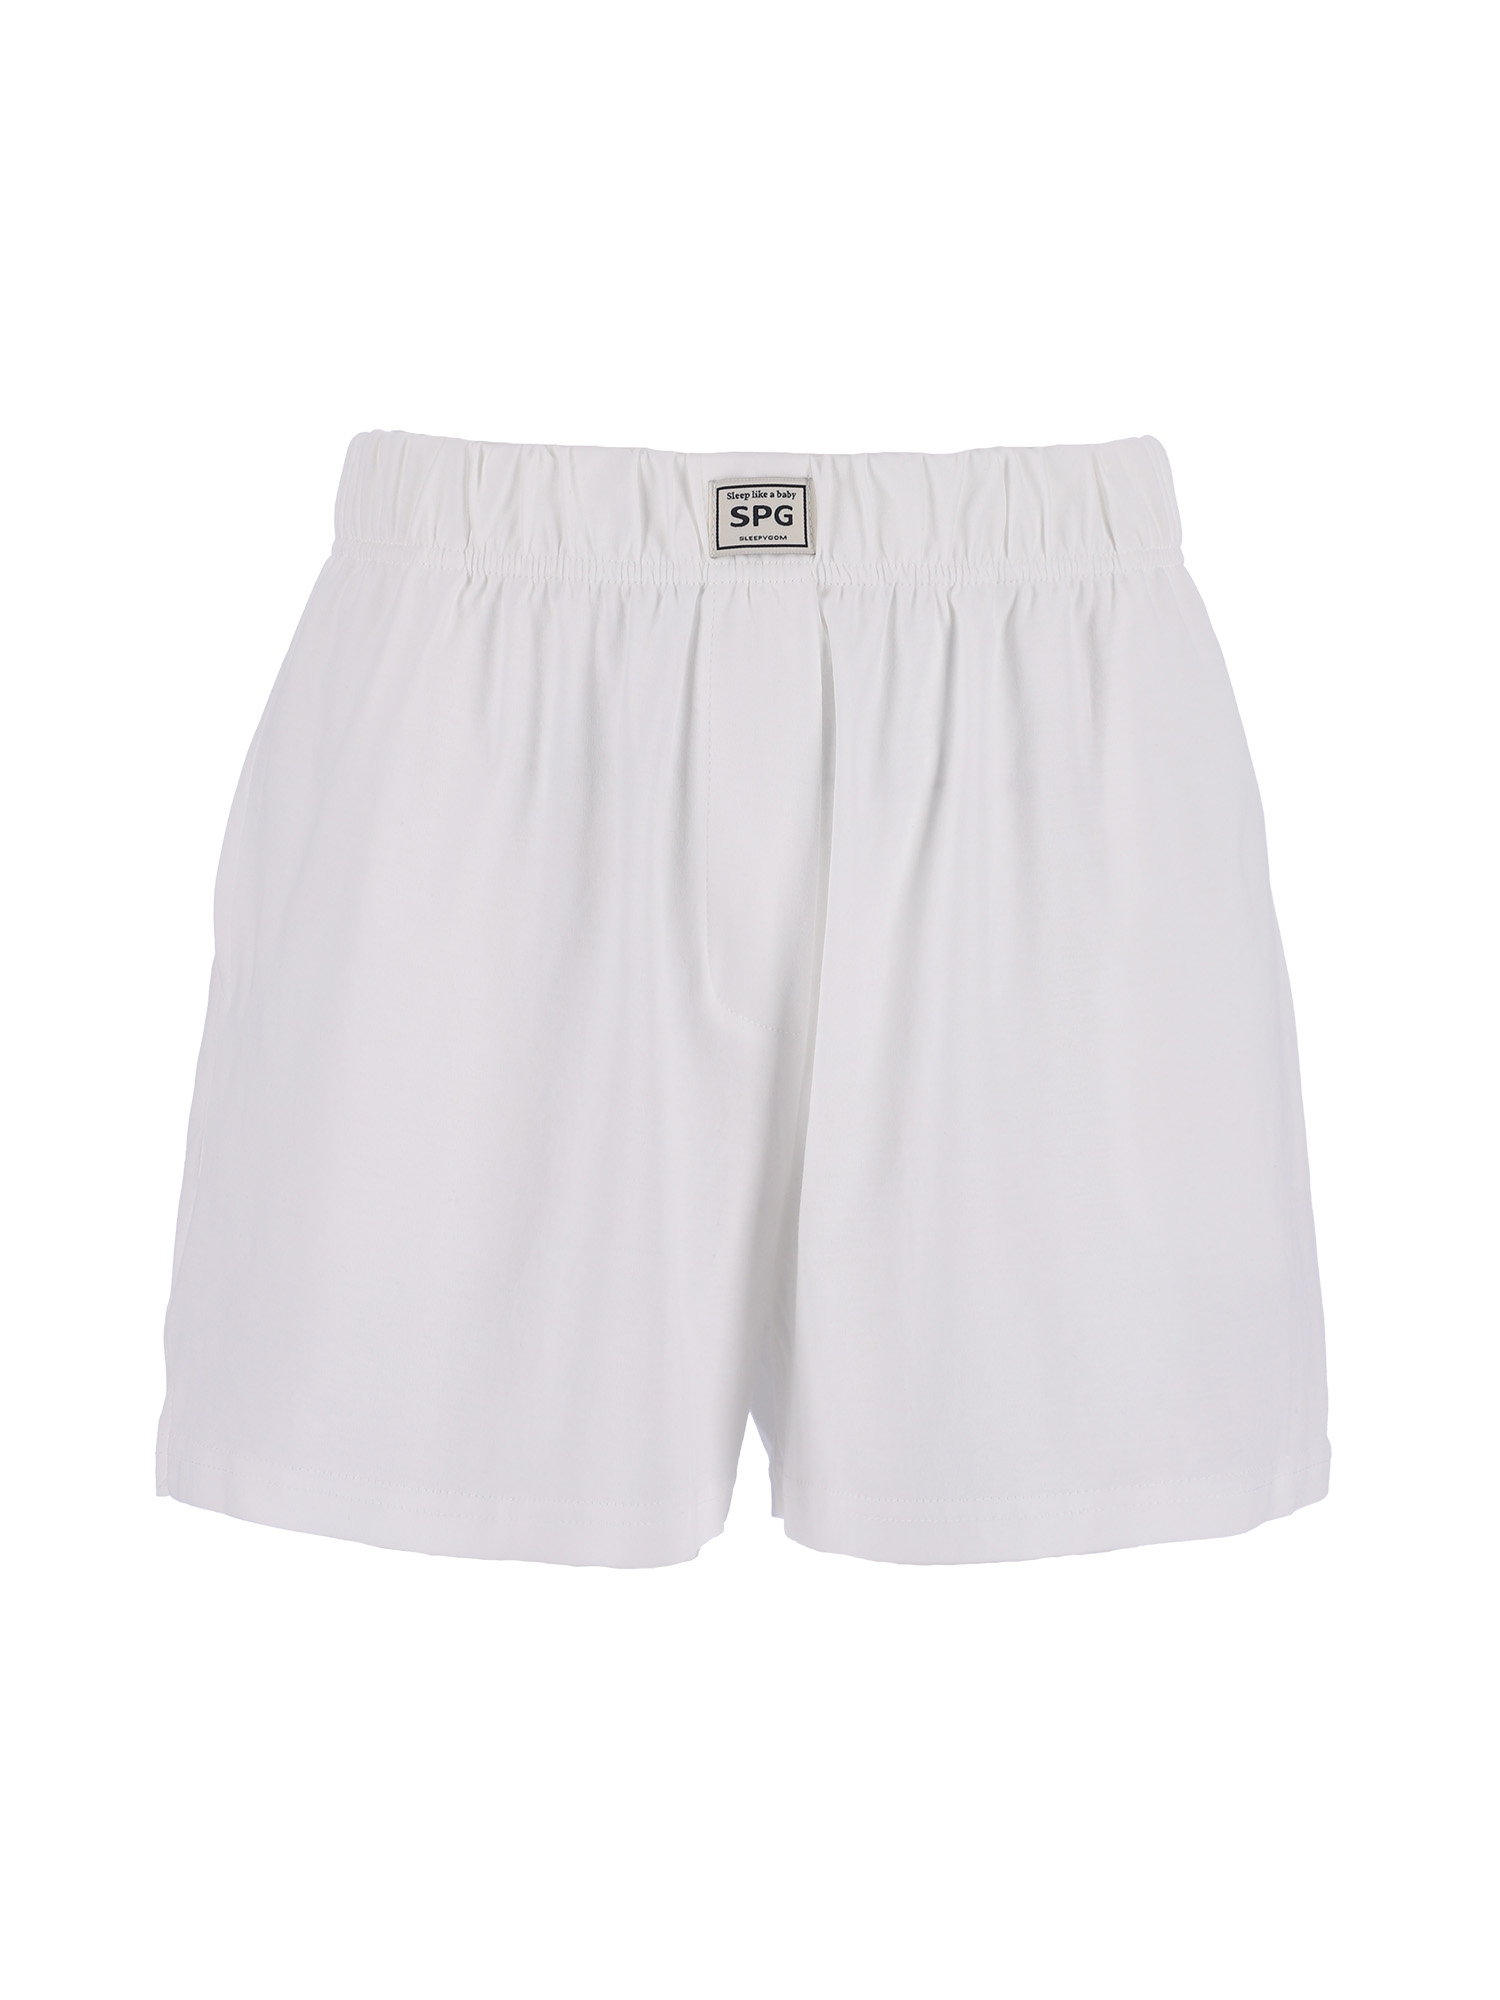 White Solid Short Pants - White